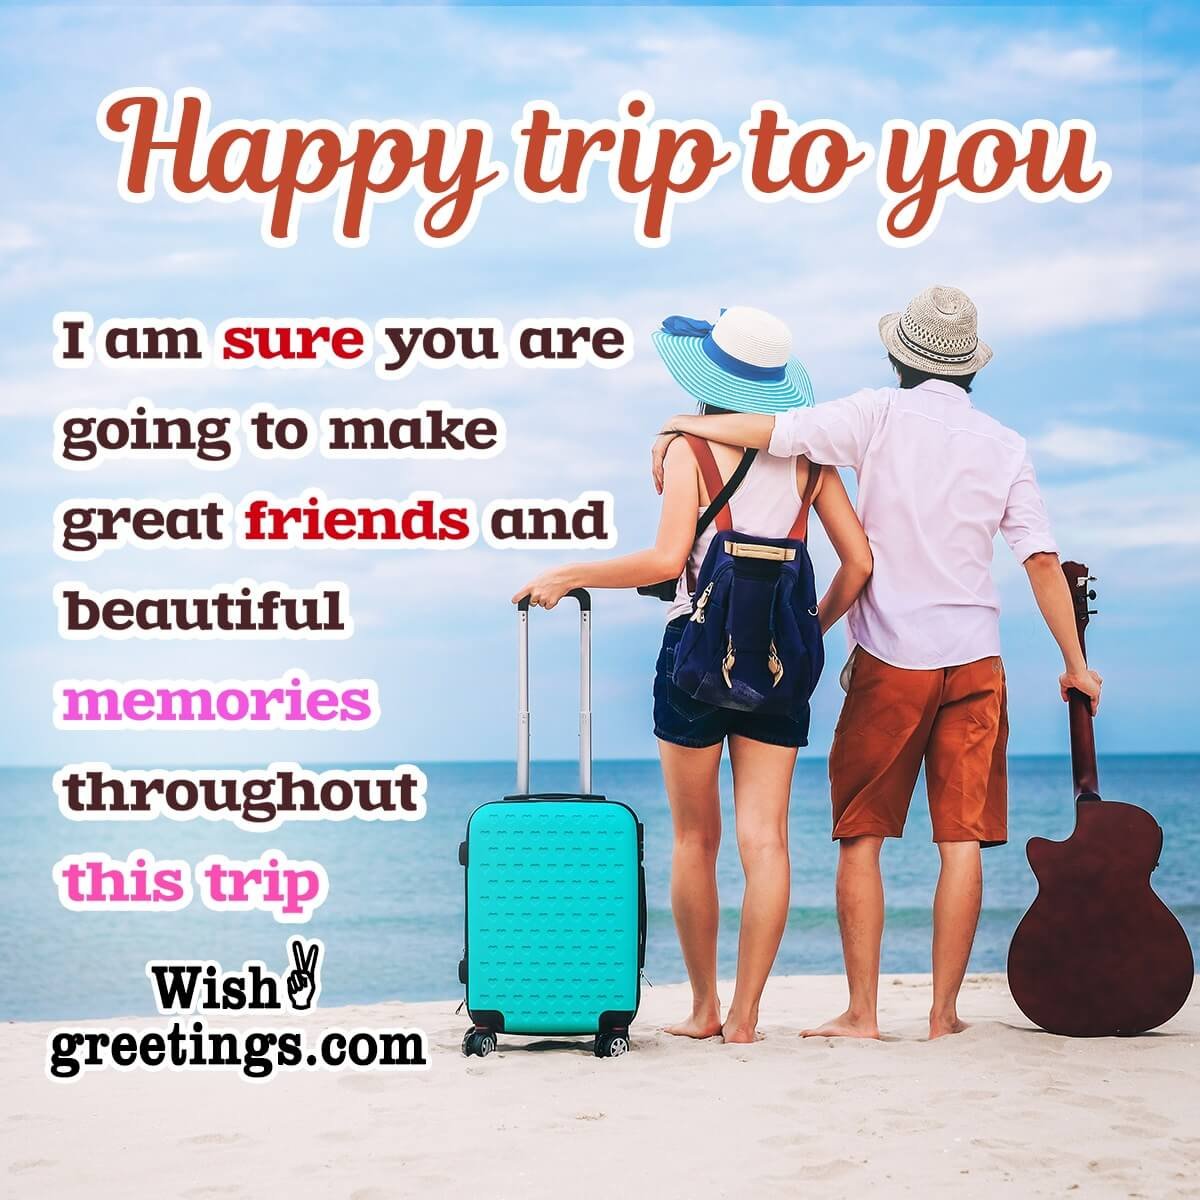 happy travel wishes